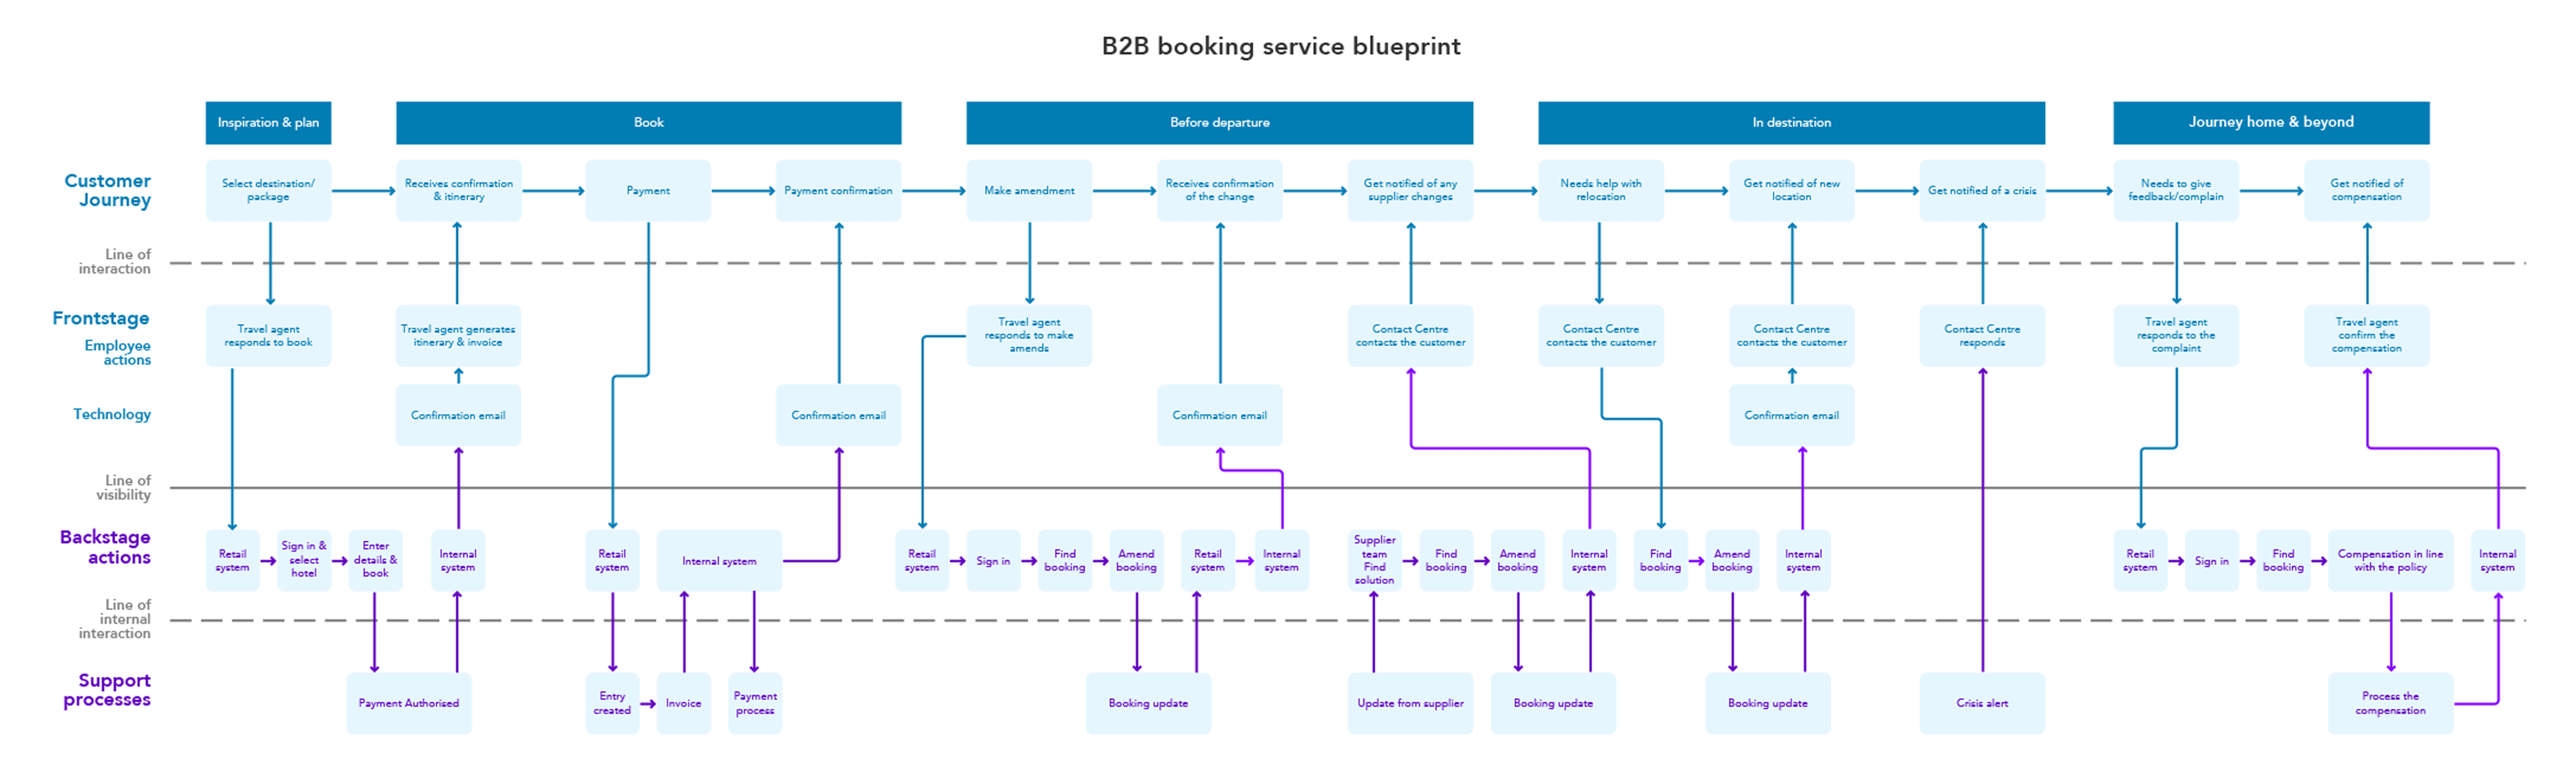 B2B booking service blueprint